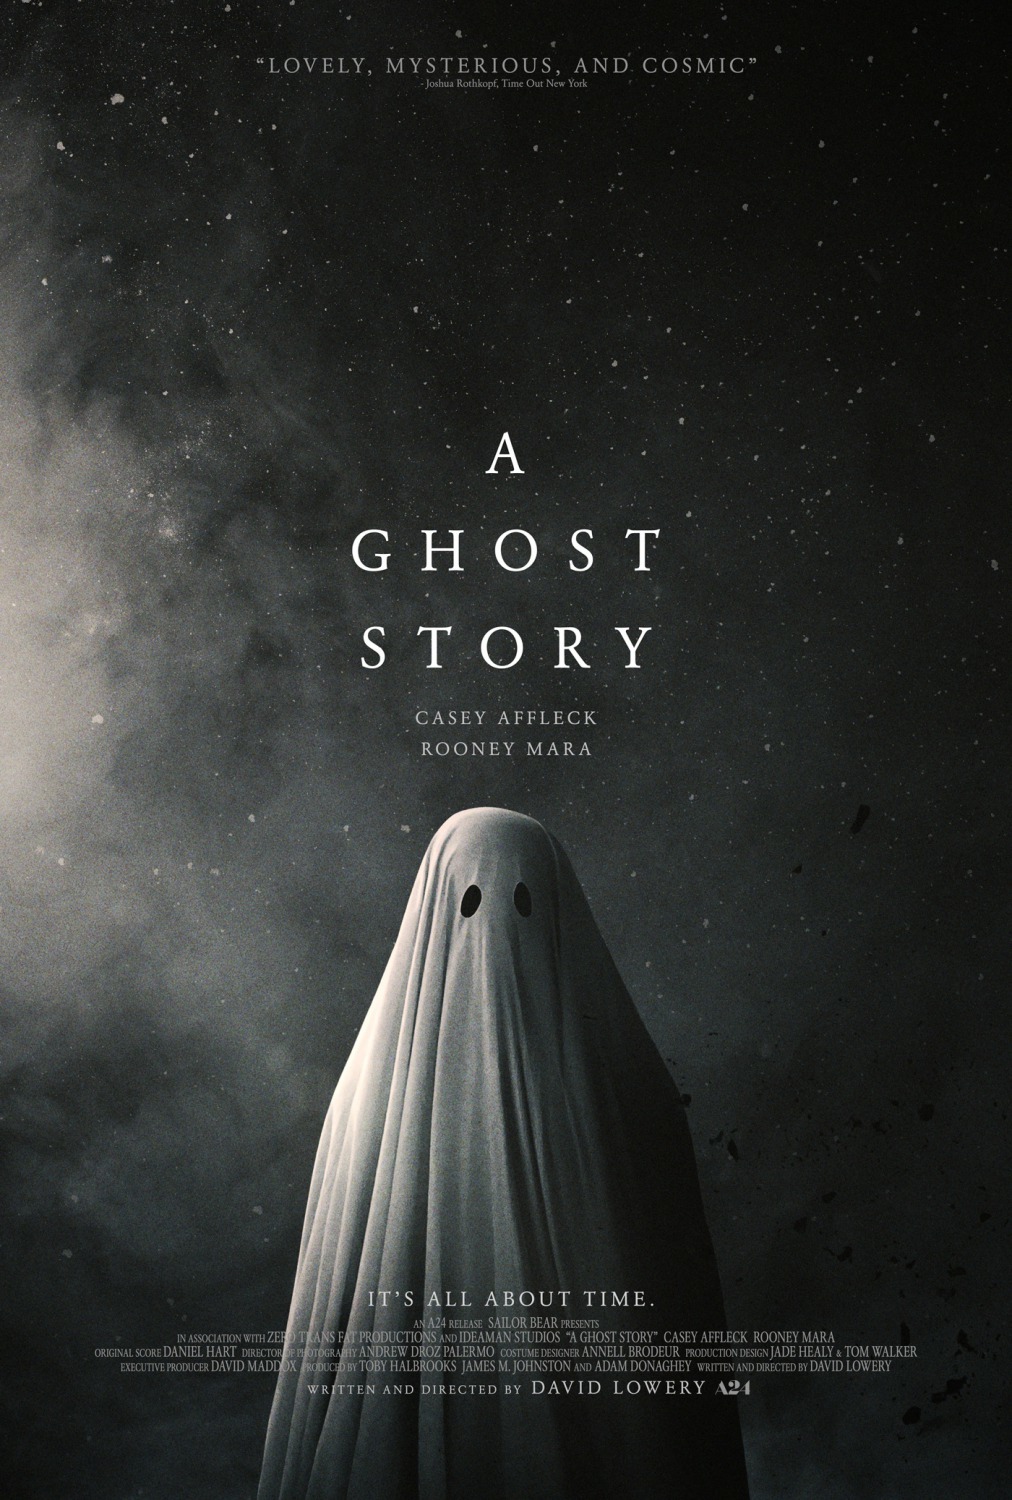 Nonton film A Ghost Story layarkaca21 indoxx1 ganool online streaming terbaru